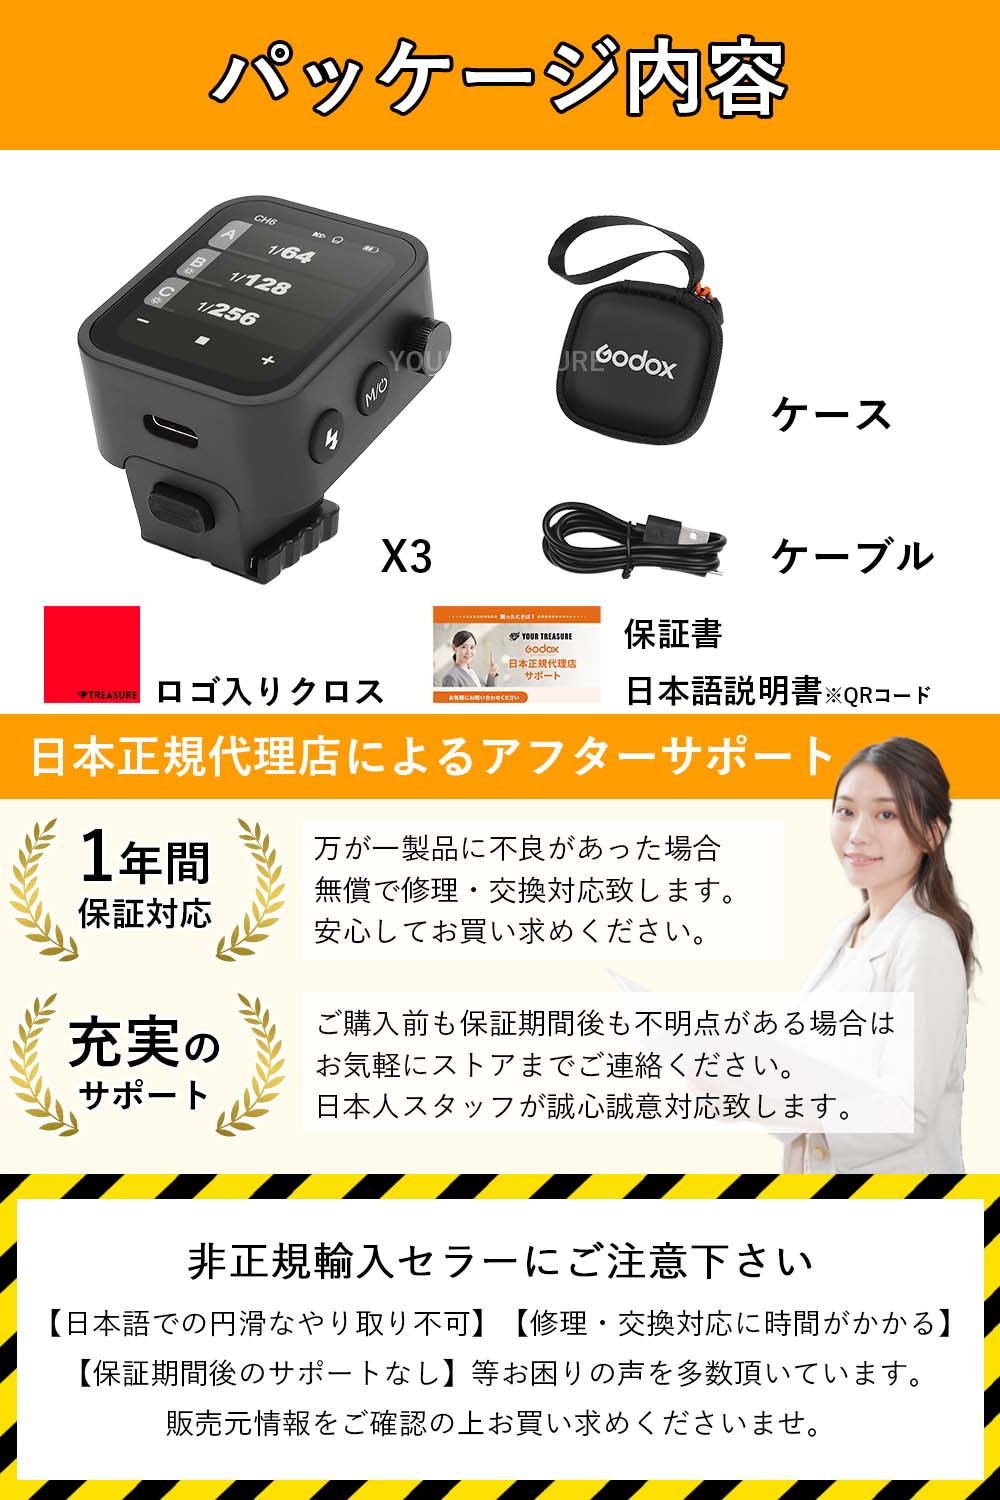 Godox X3-N Nikon ニコン対応 ワイヤレス 送信機  トランスミッター